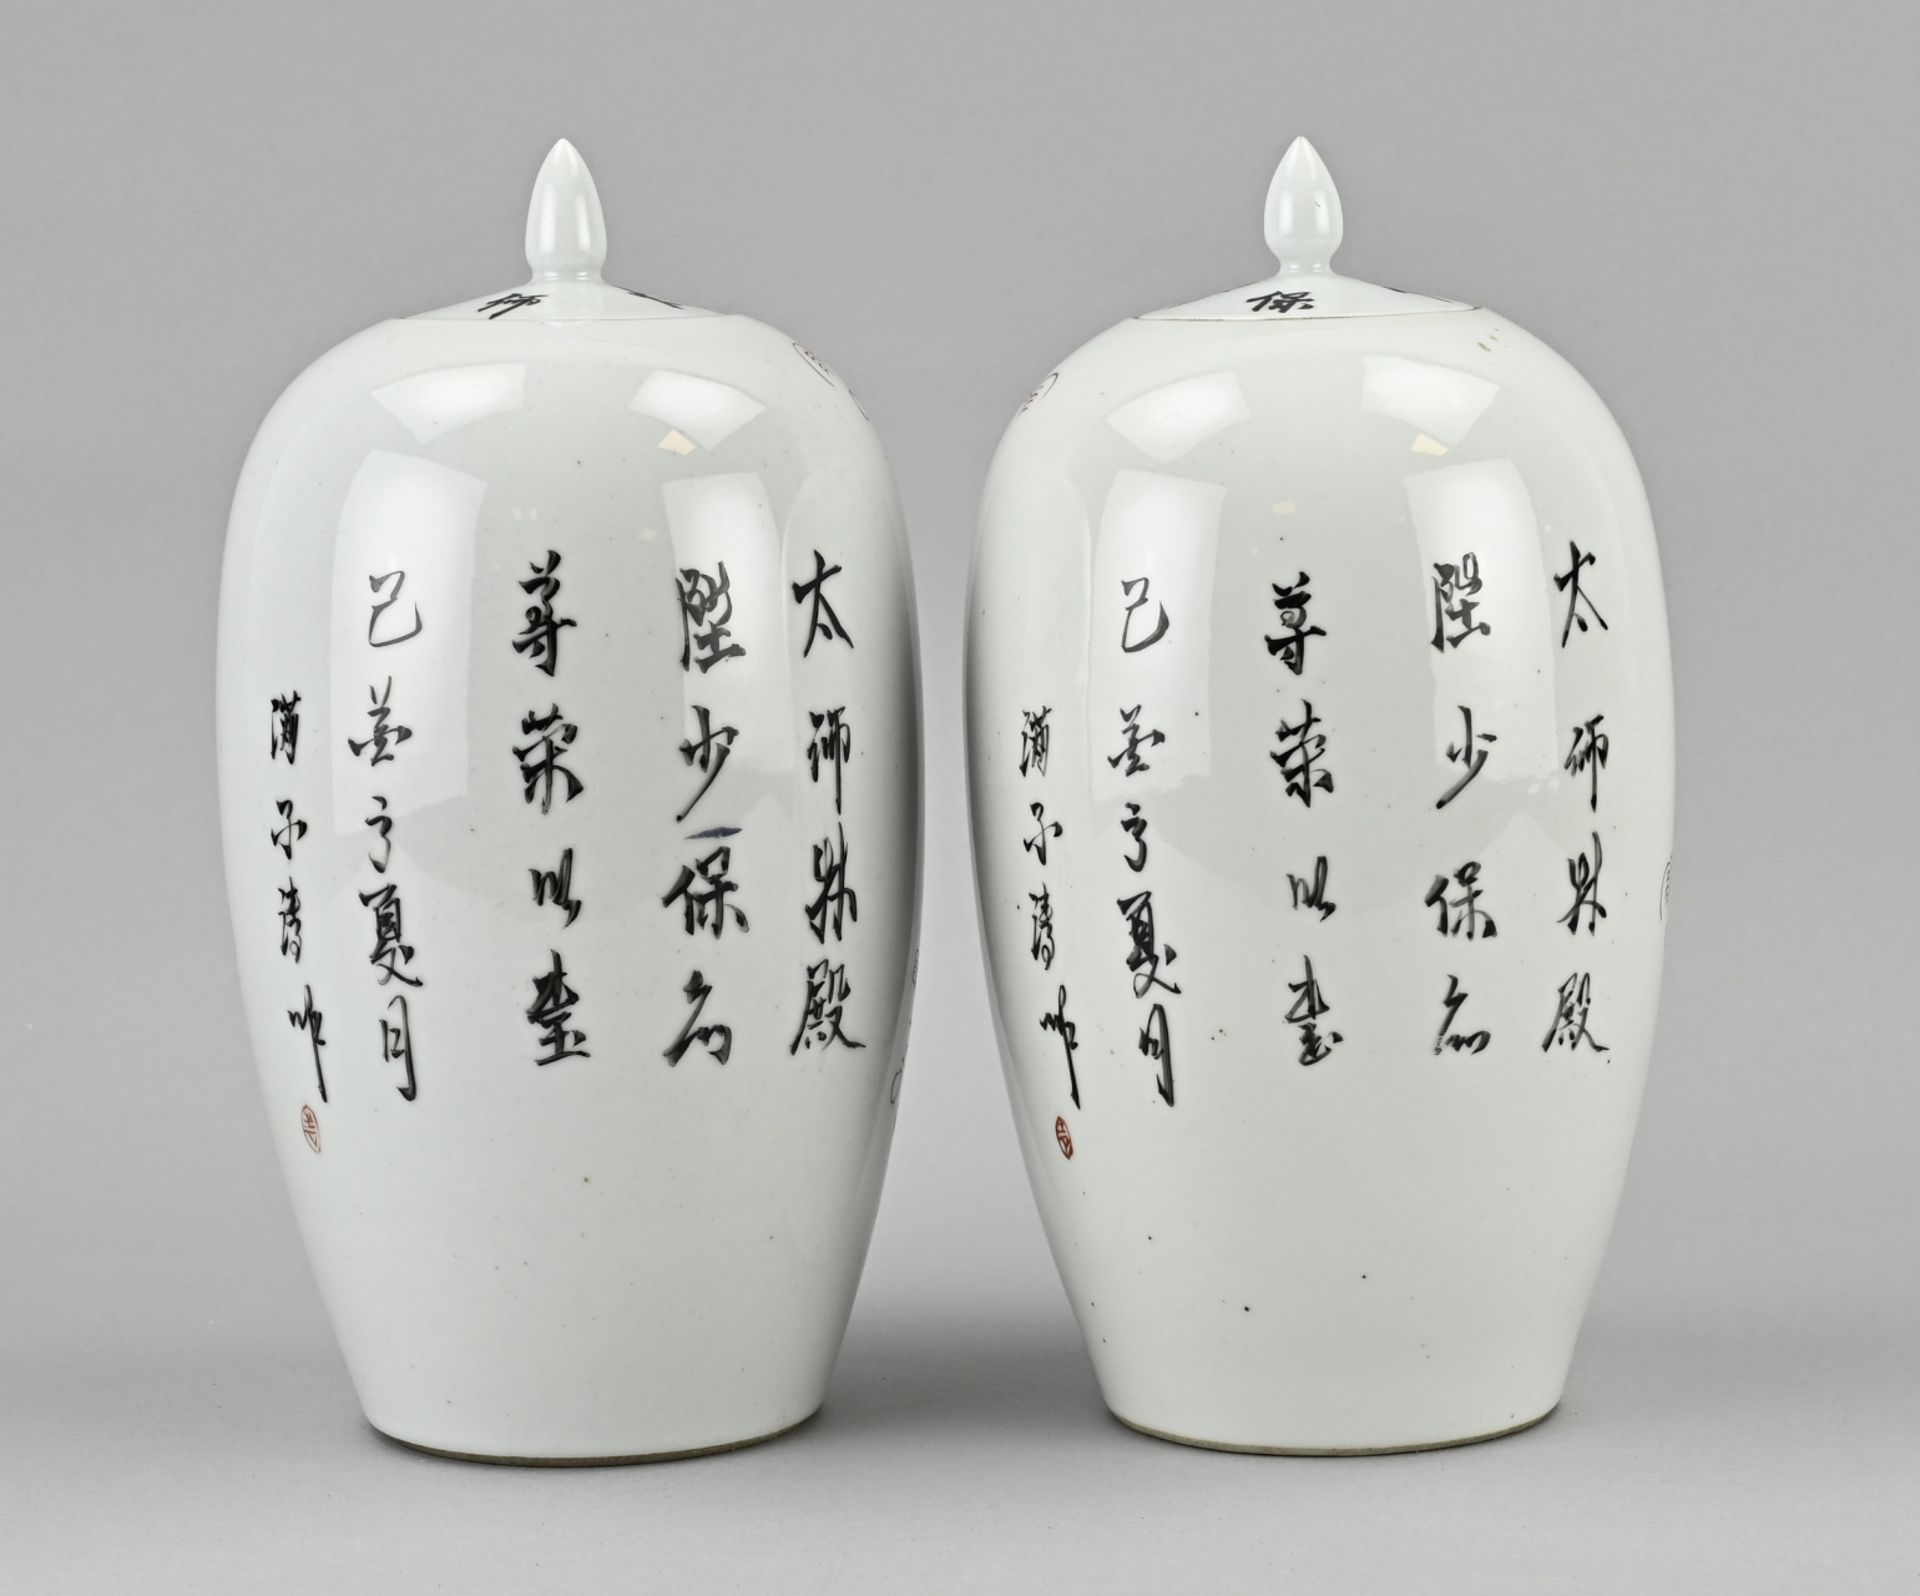 2x Chinese vase, H 28 cm. - Image 2 of 3